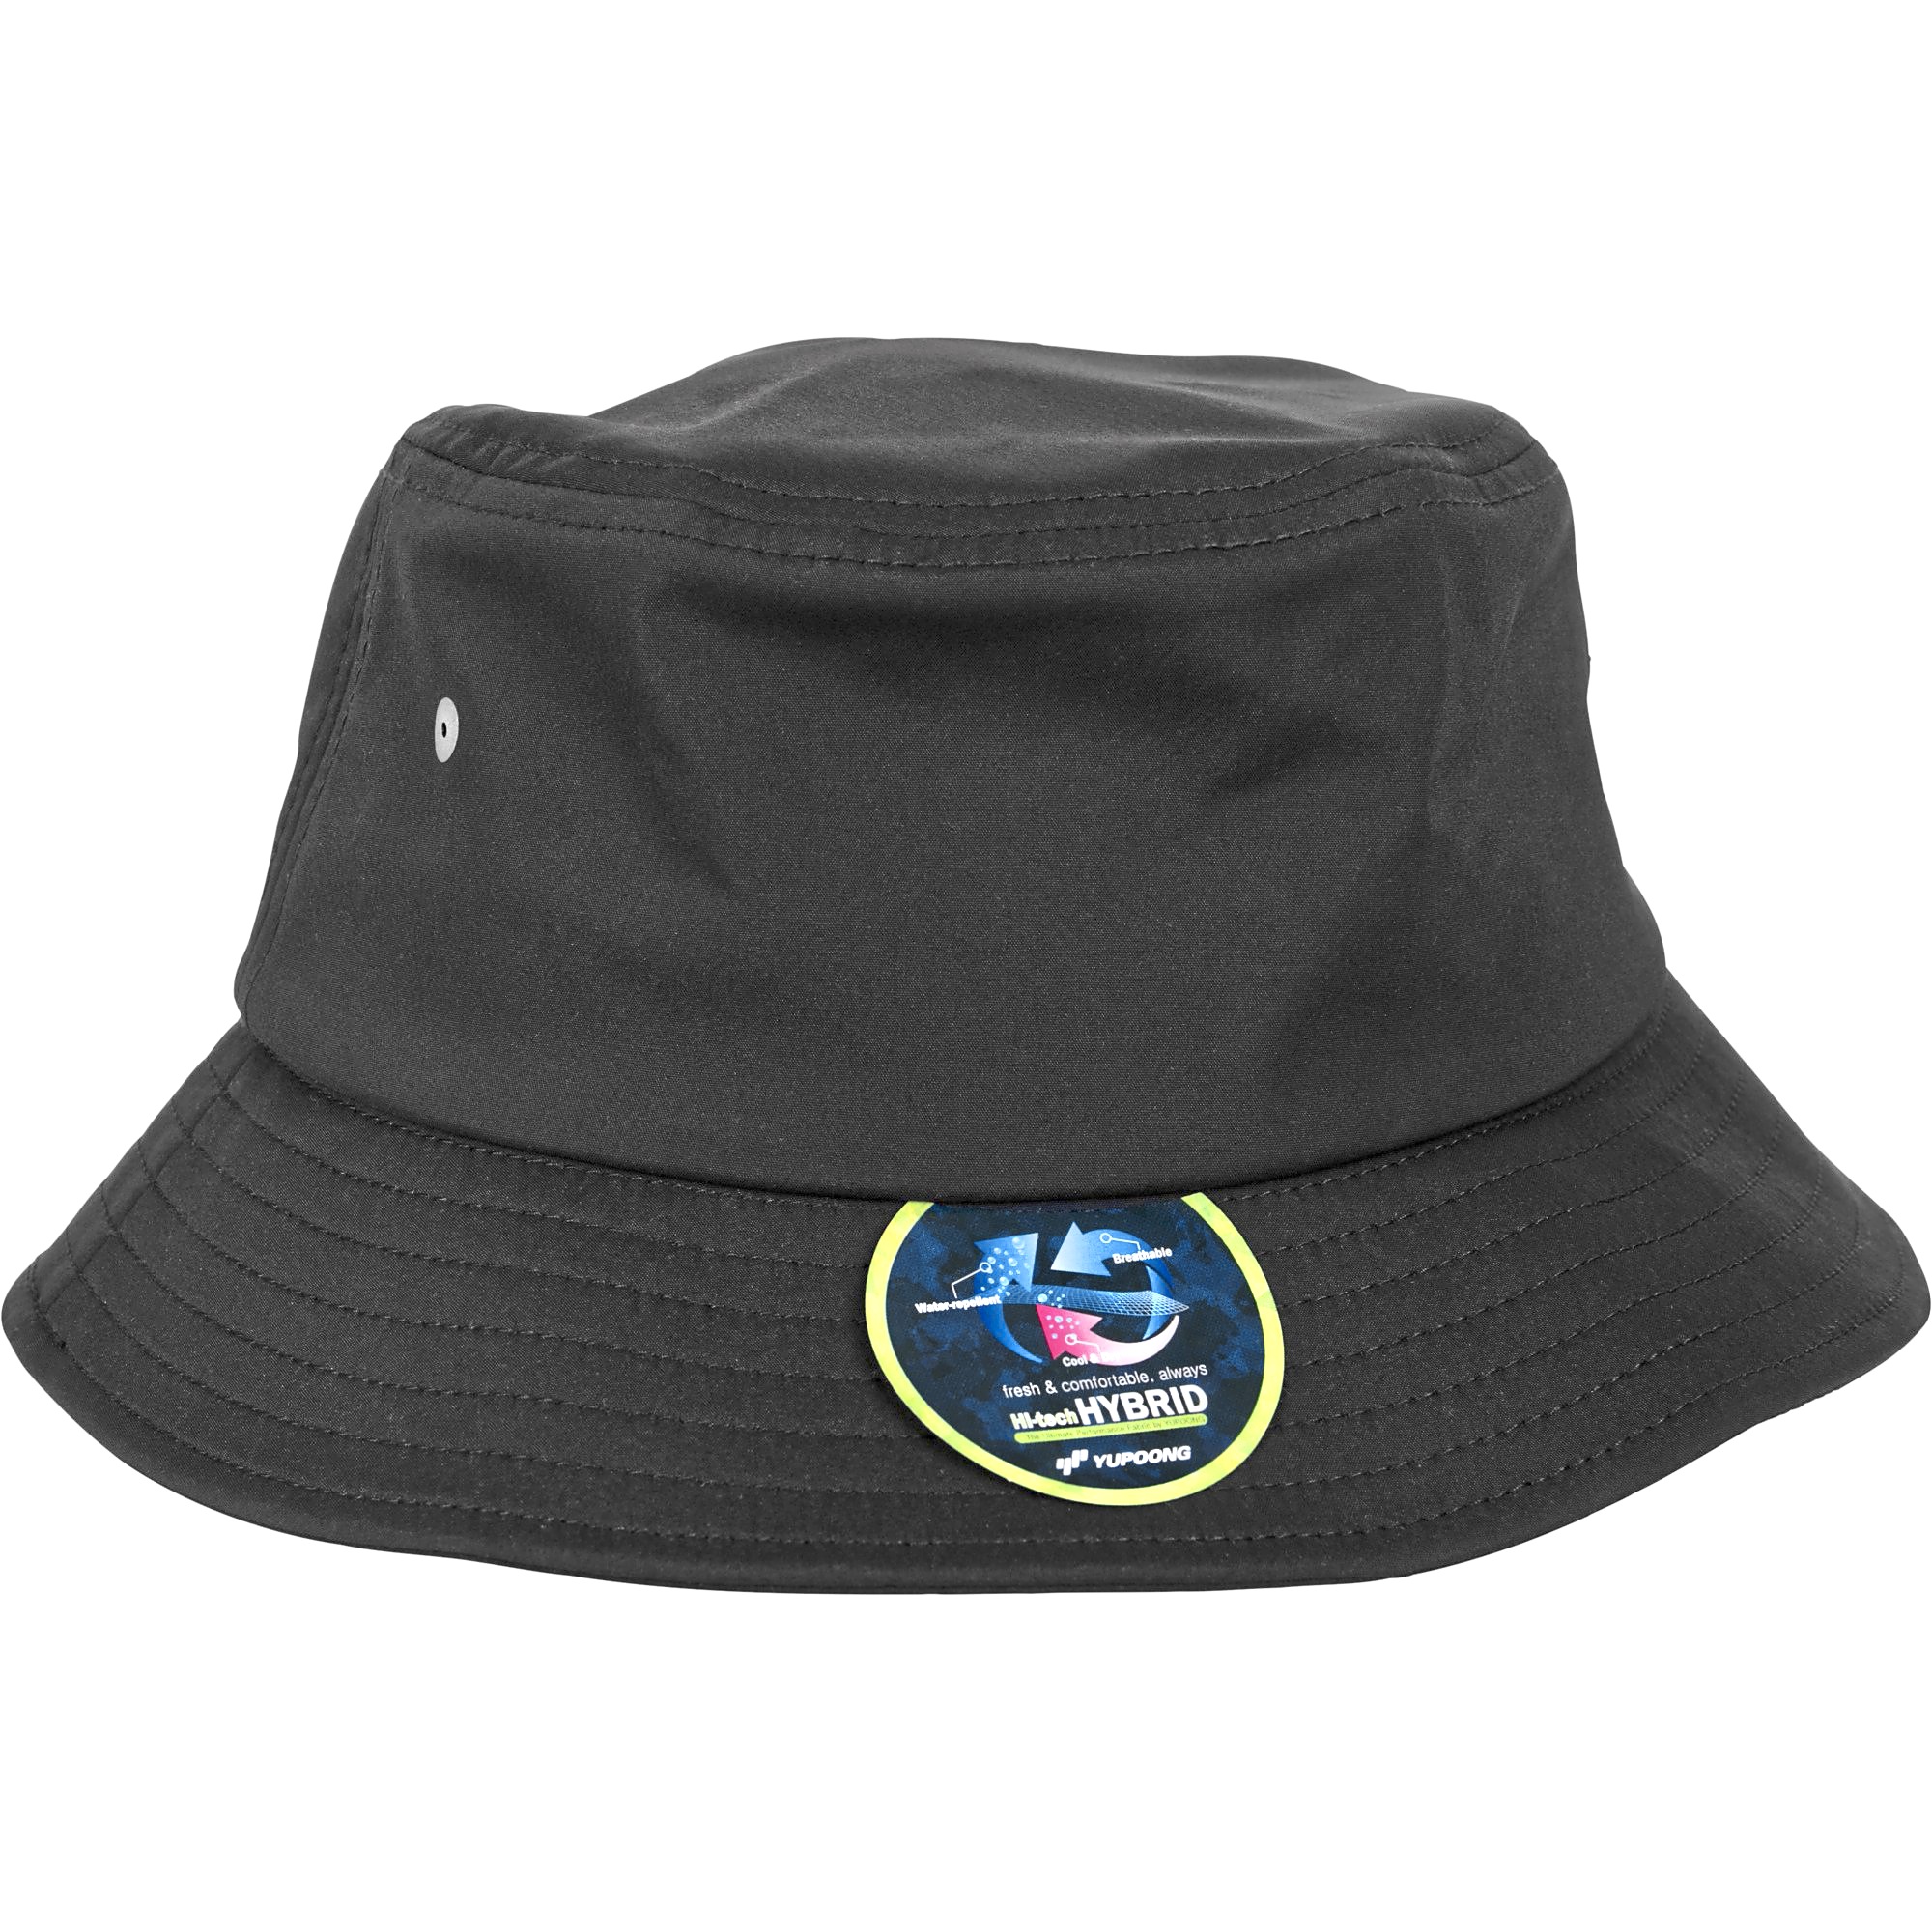 Bucket Hats - FLEXFIT - Nylon Bucket Hat - FX5003N